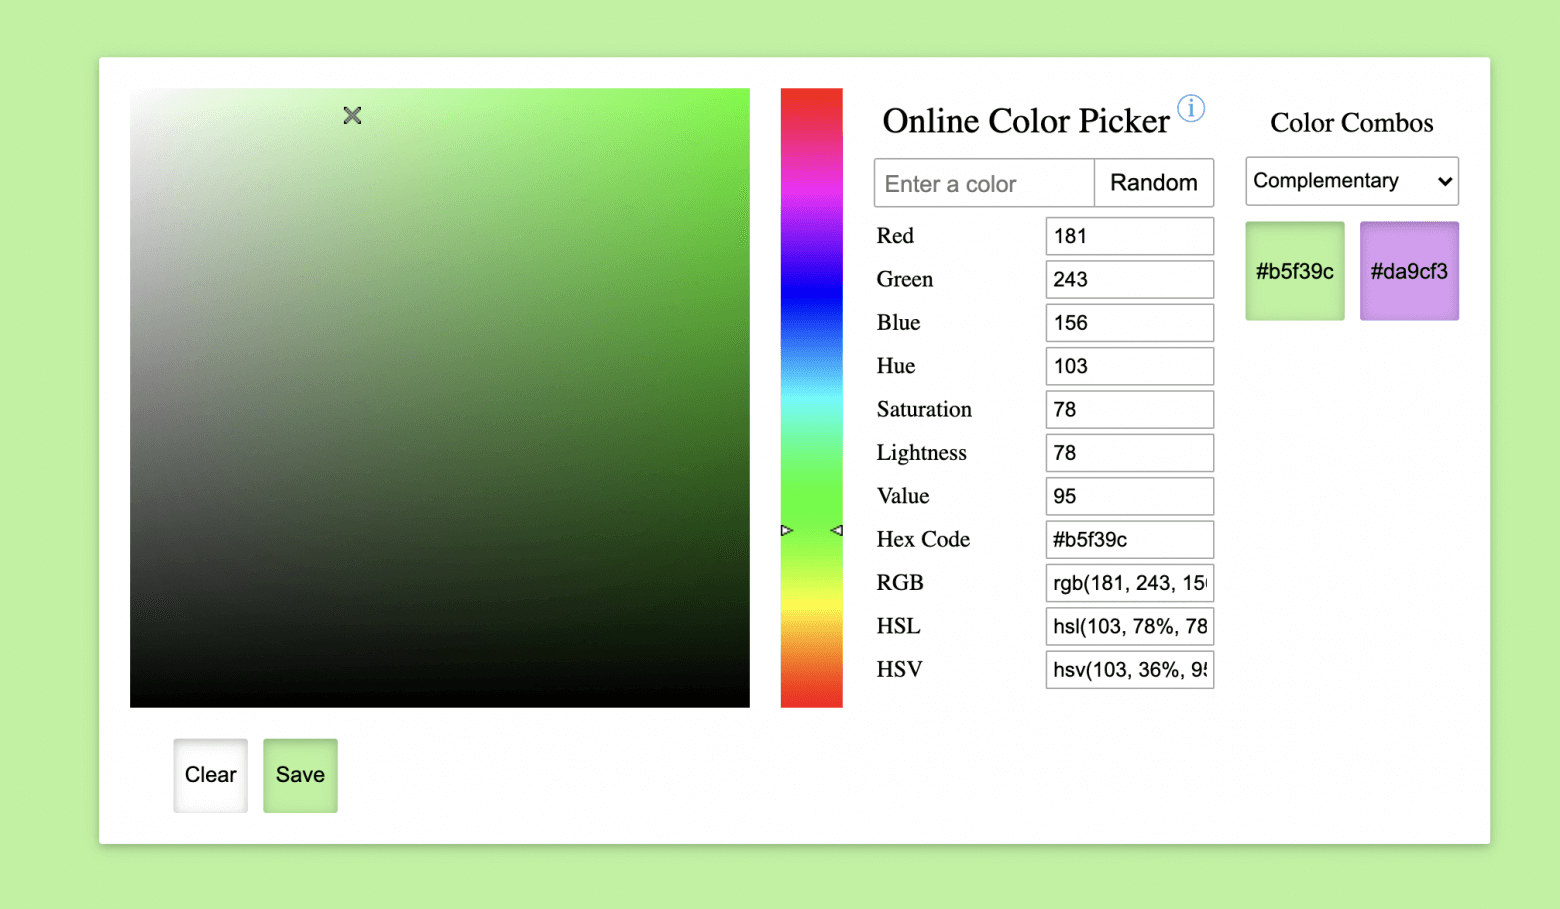 Online Color Picker